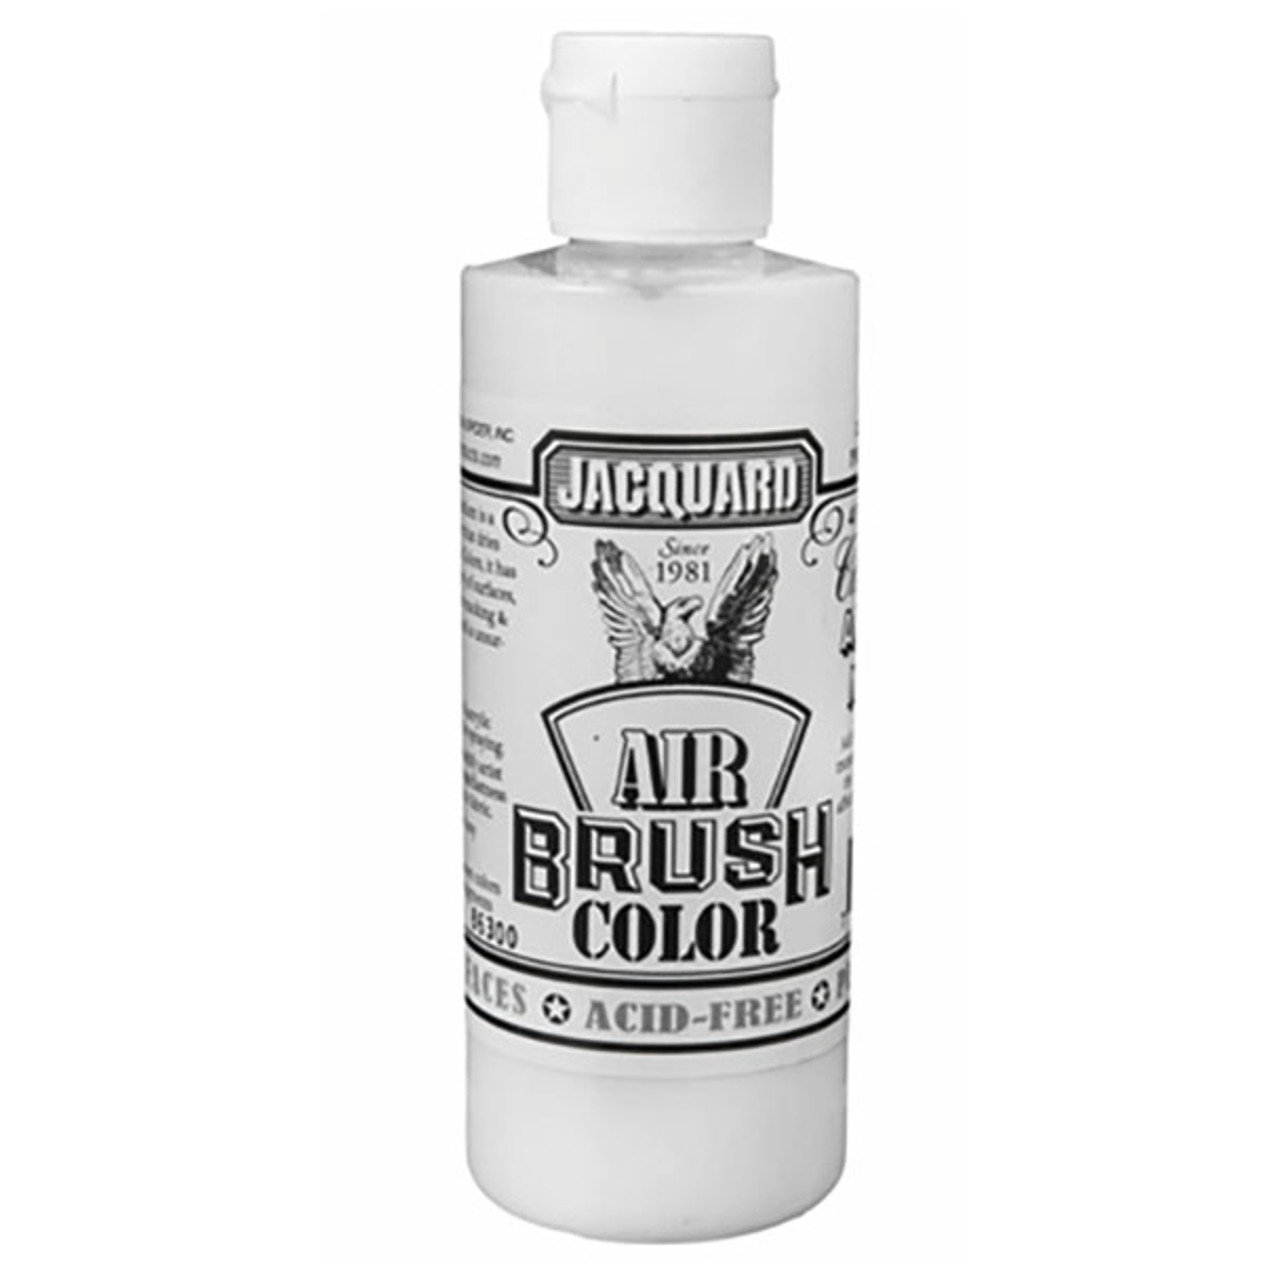 Jacquard Airbrush Paint - 4 oz, Navy